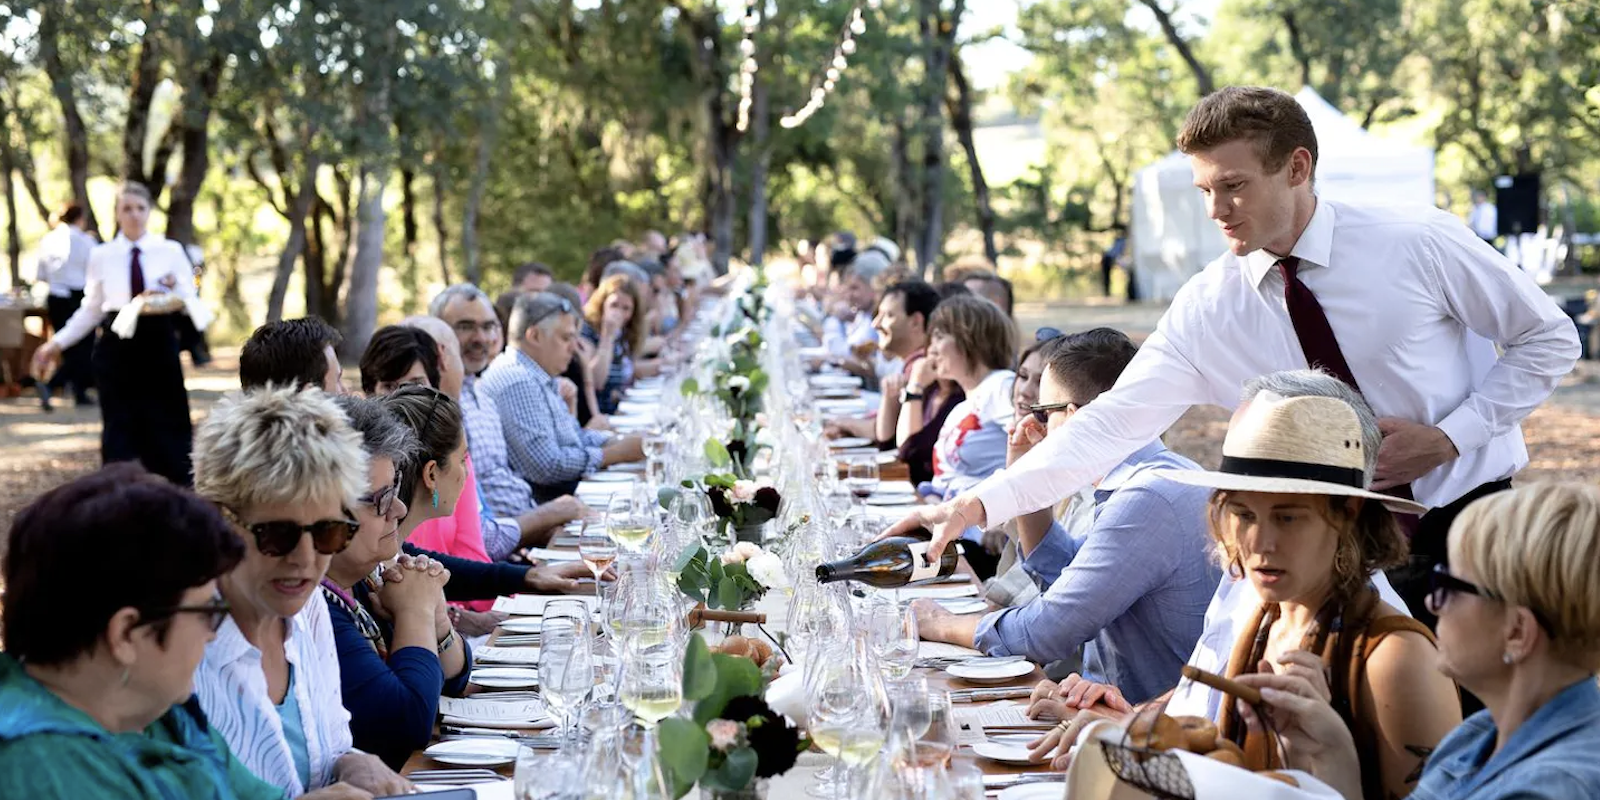 Waiter pours wine at long dinner table for Medlock Ames' Dinner in the Vineyard, Sonoma, California